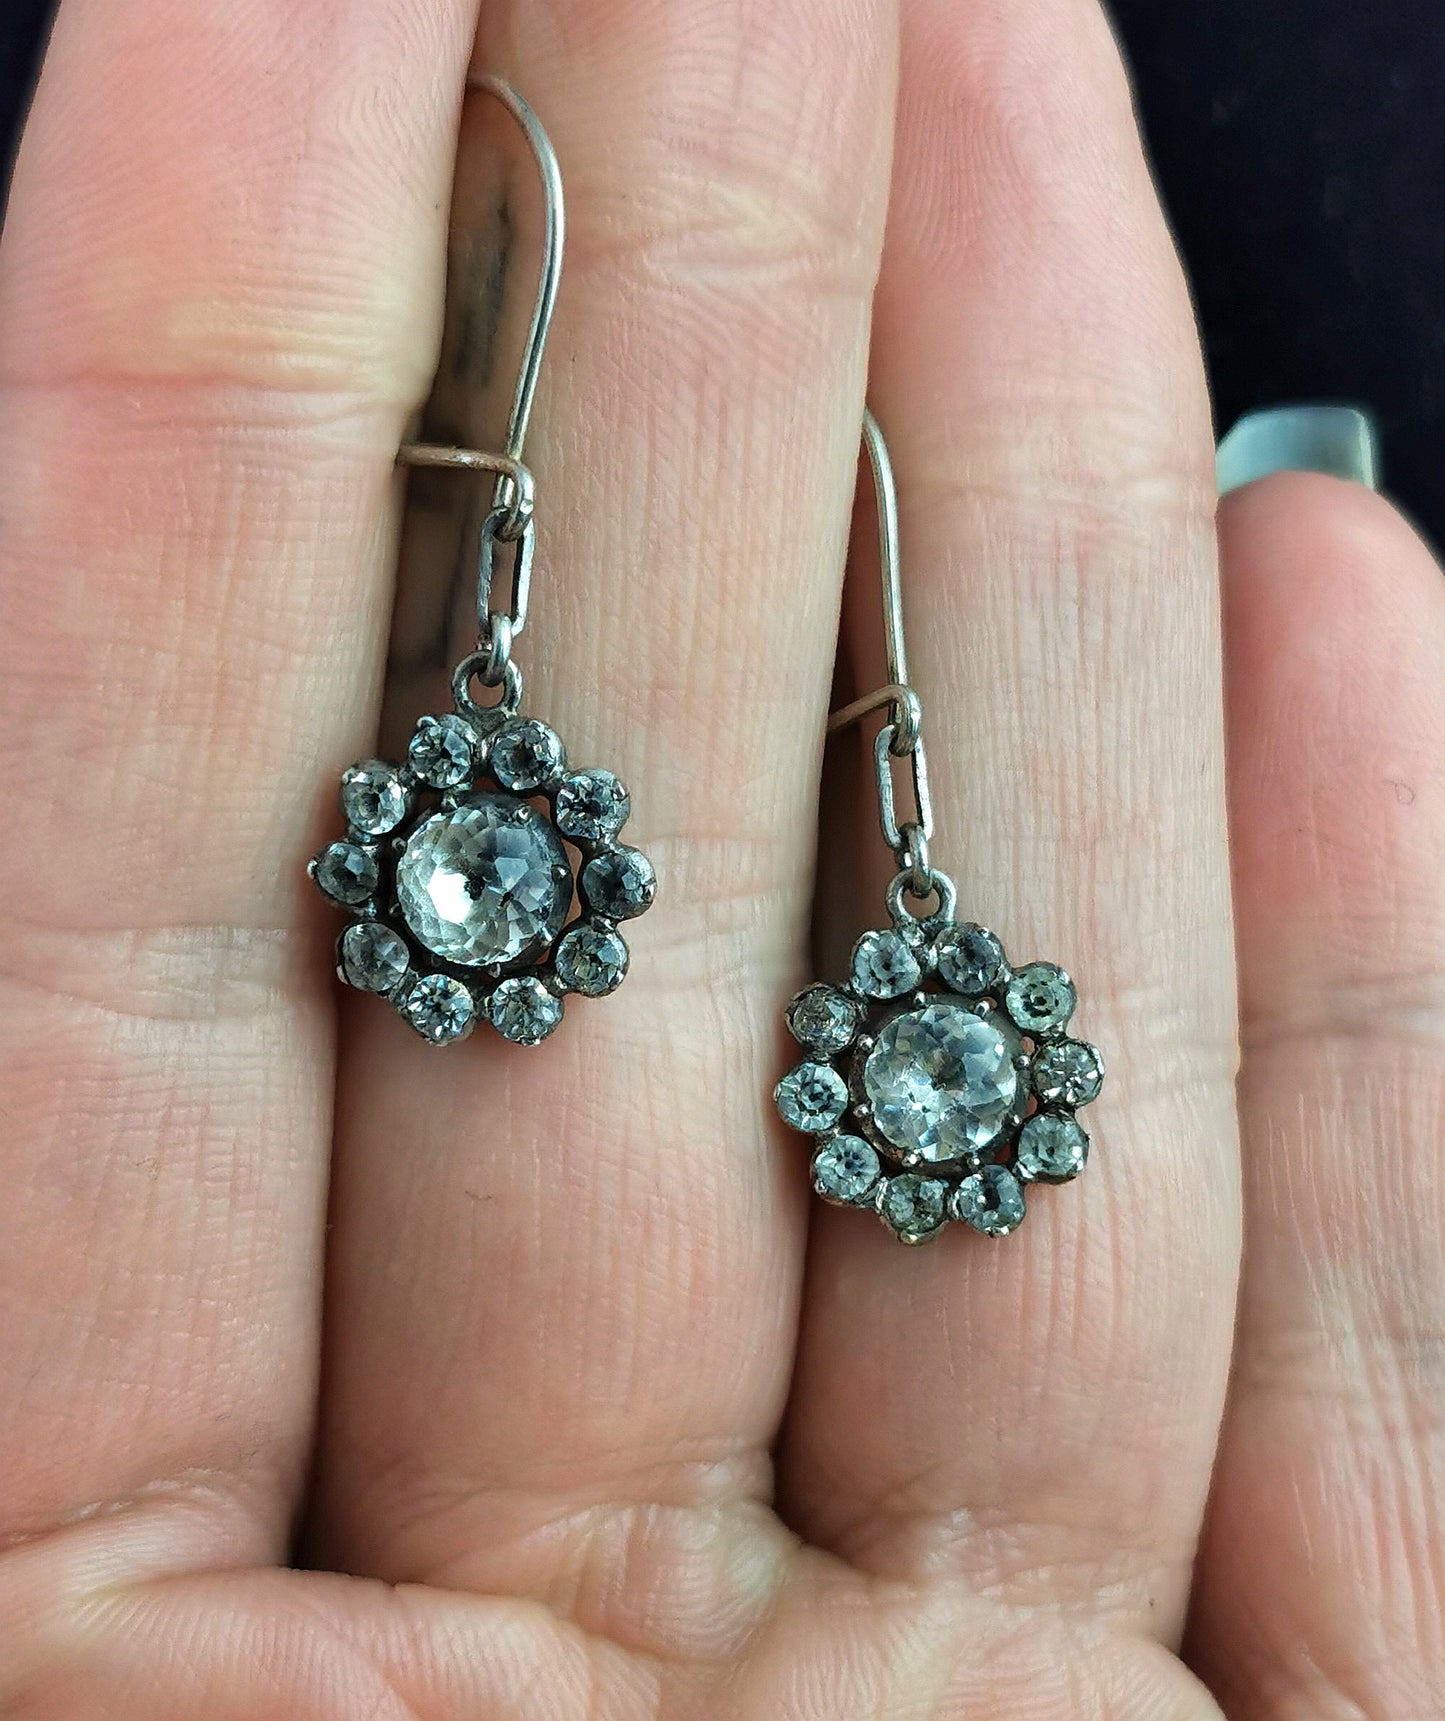 Antique Georgian black dot paste flower earrings, Sterling silver